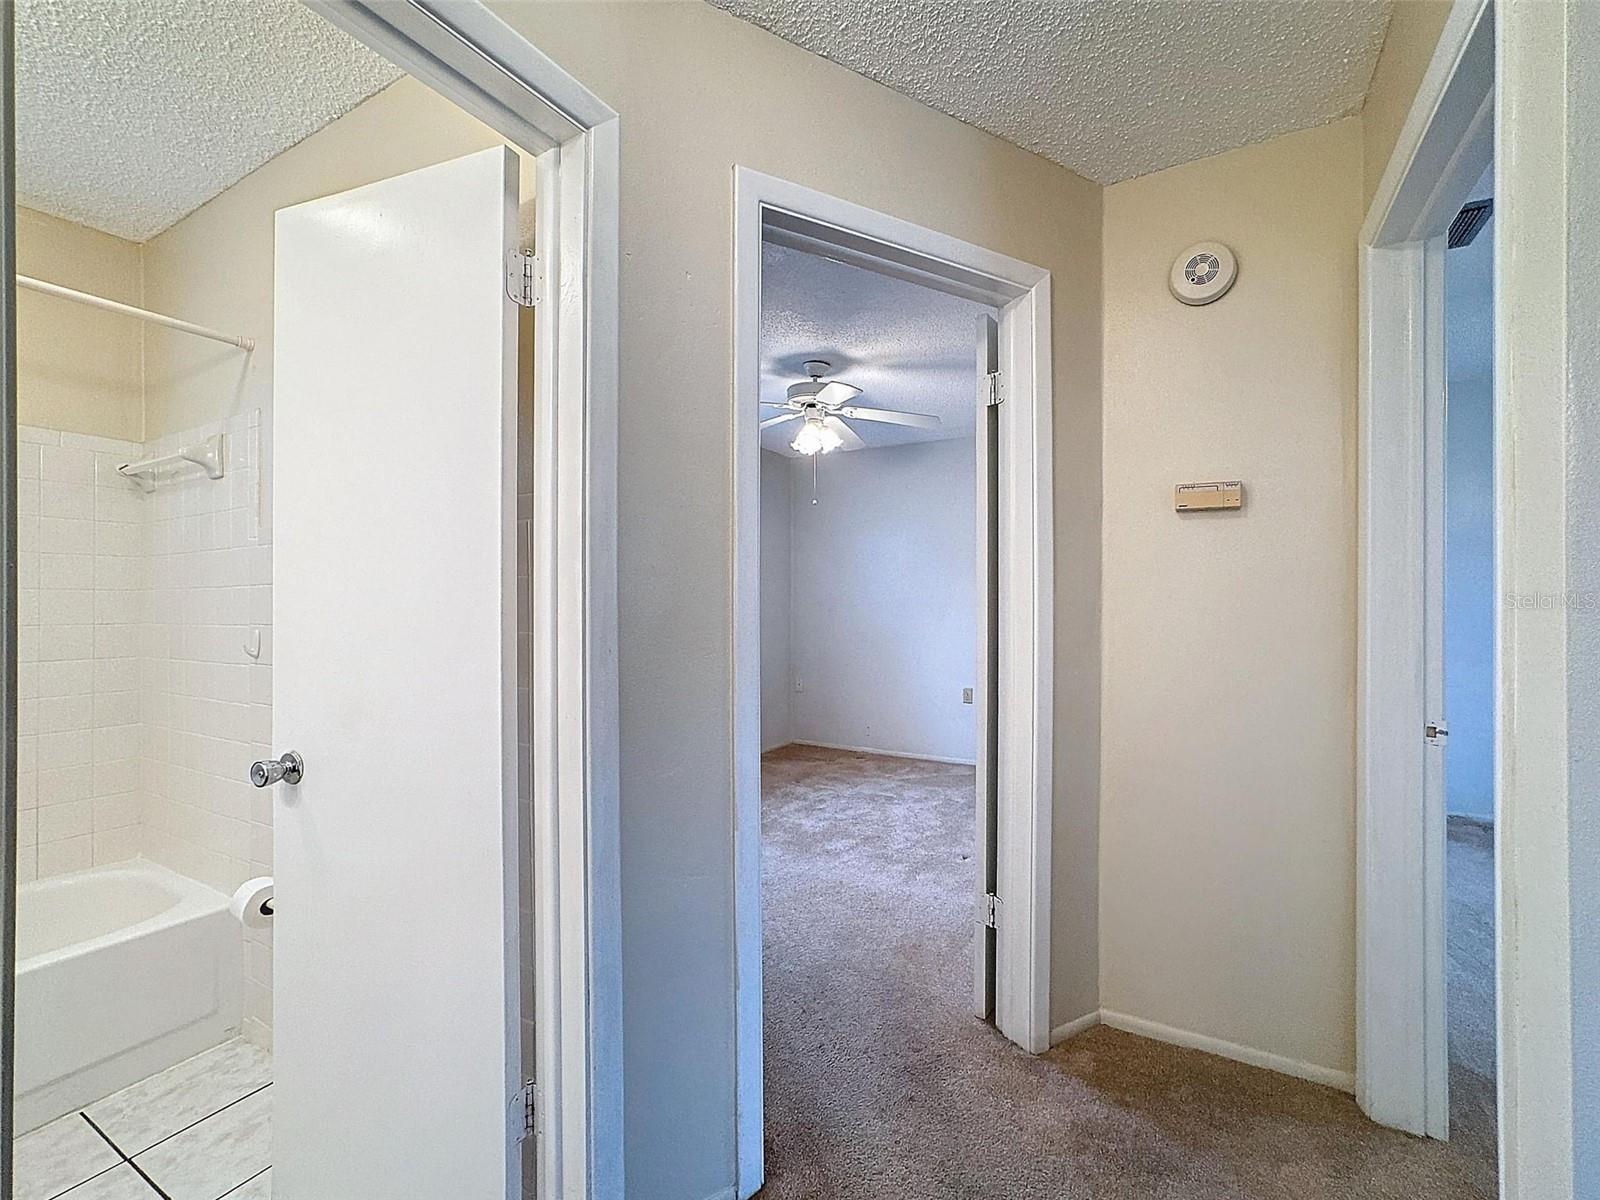 Hallway to Bathroom and Bedrooms